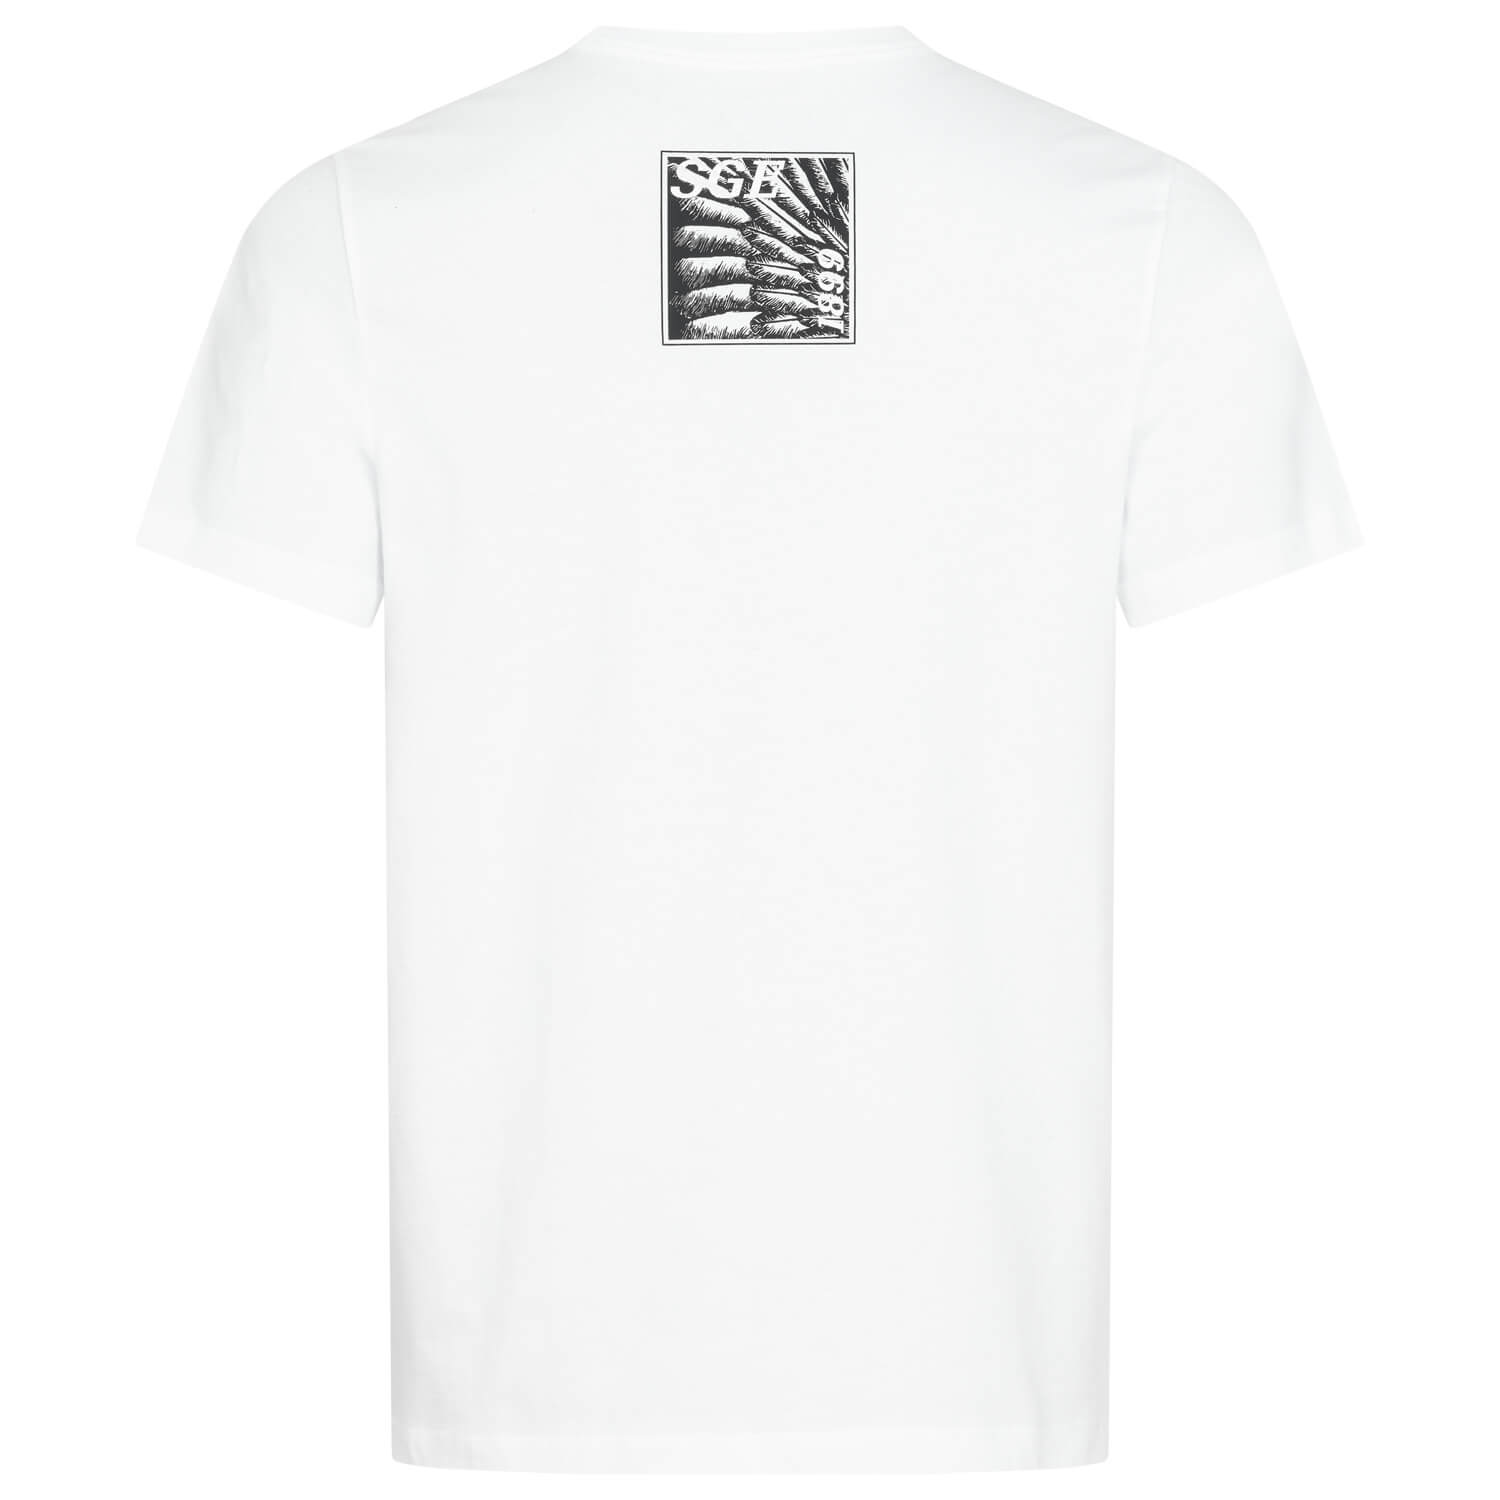 Bild 2: Nike T-Shirt Feather